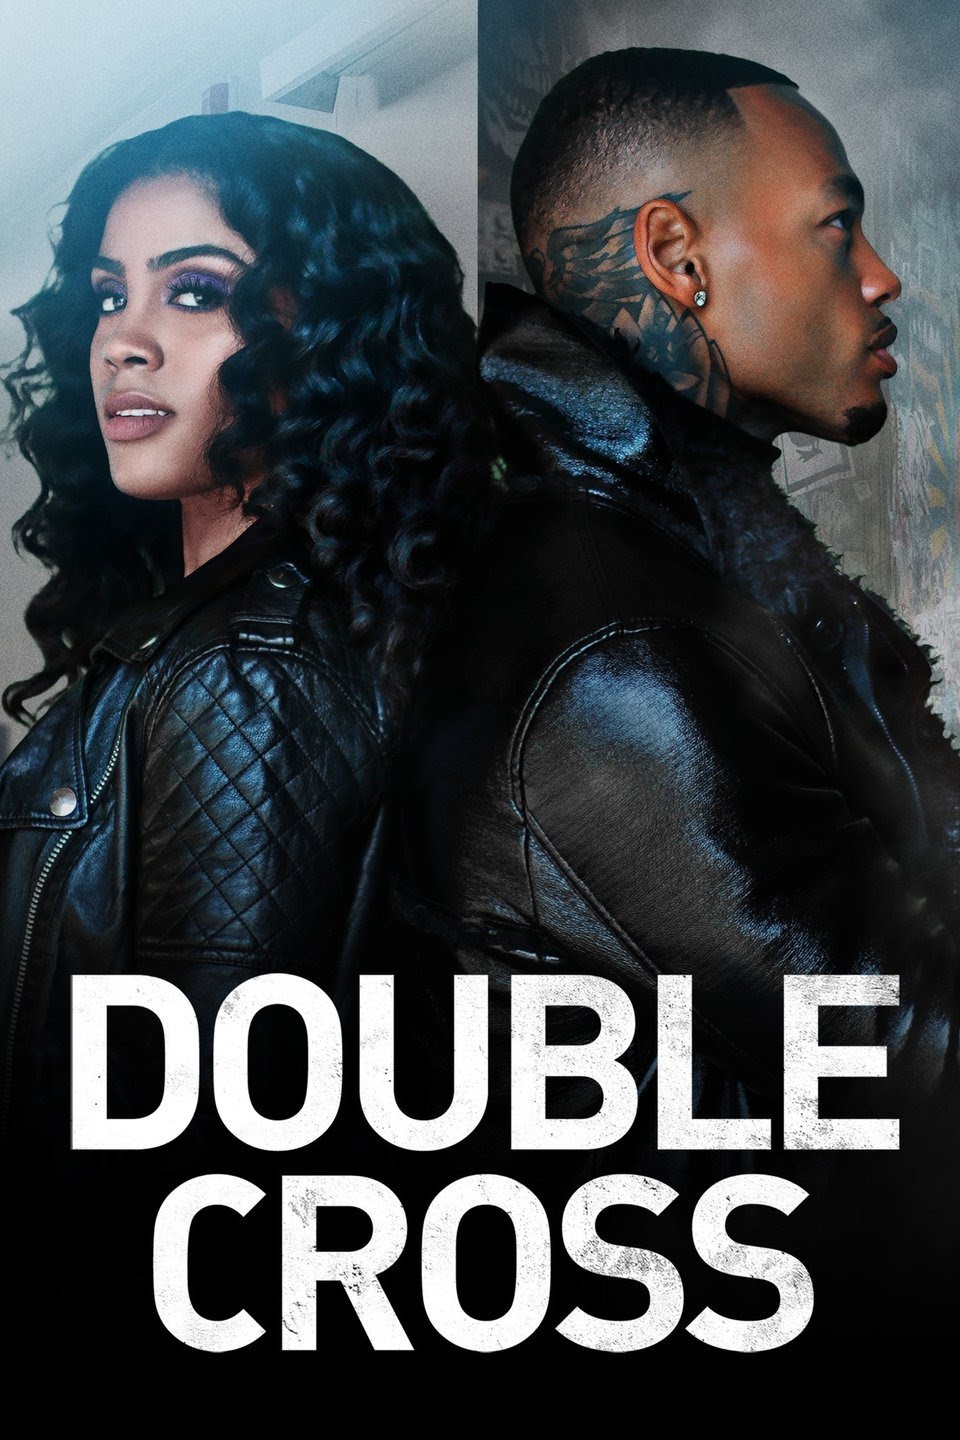 Watch 'Double Cross' Season 2 Trailer TVMusic Network